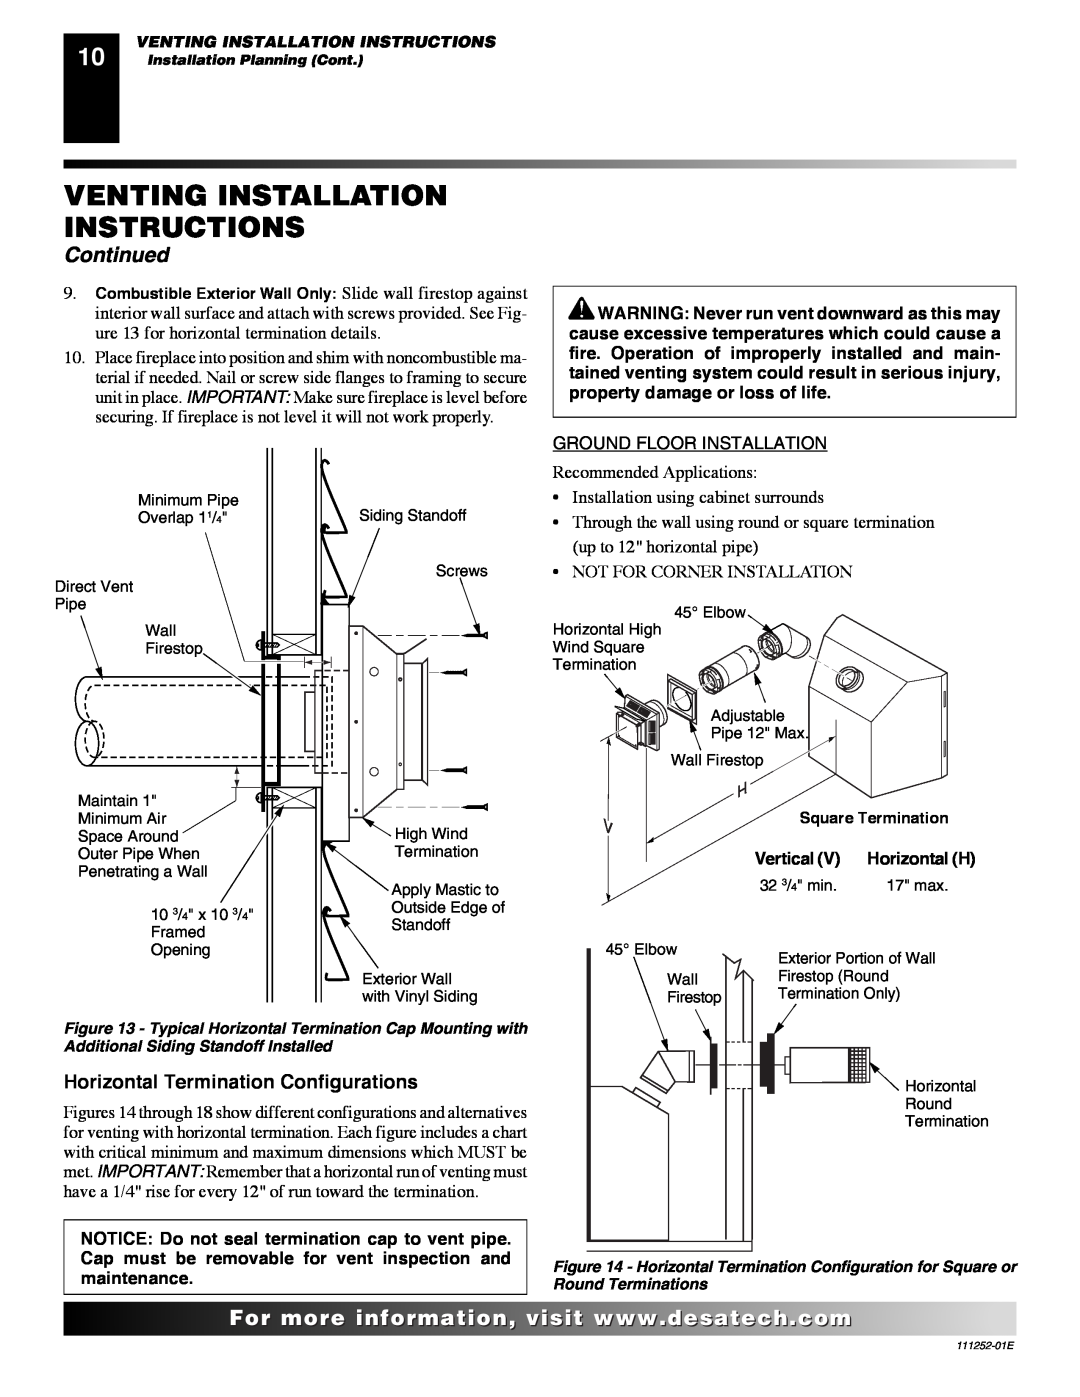 Desa (V)V36P-B SERIES, VV36PC1 SERIES Horizontal Termination Configurations, Venting Installation Instructions, Continued 